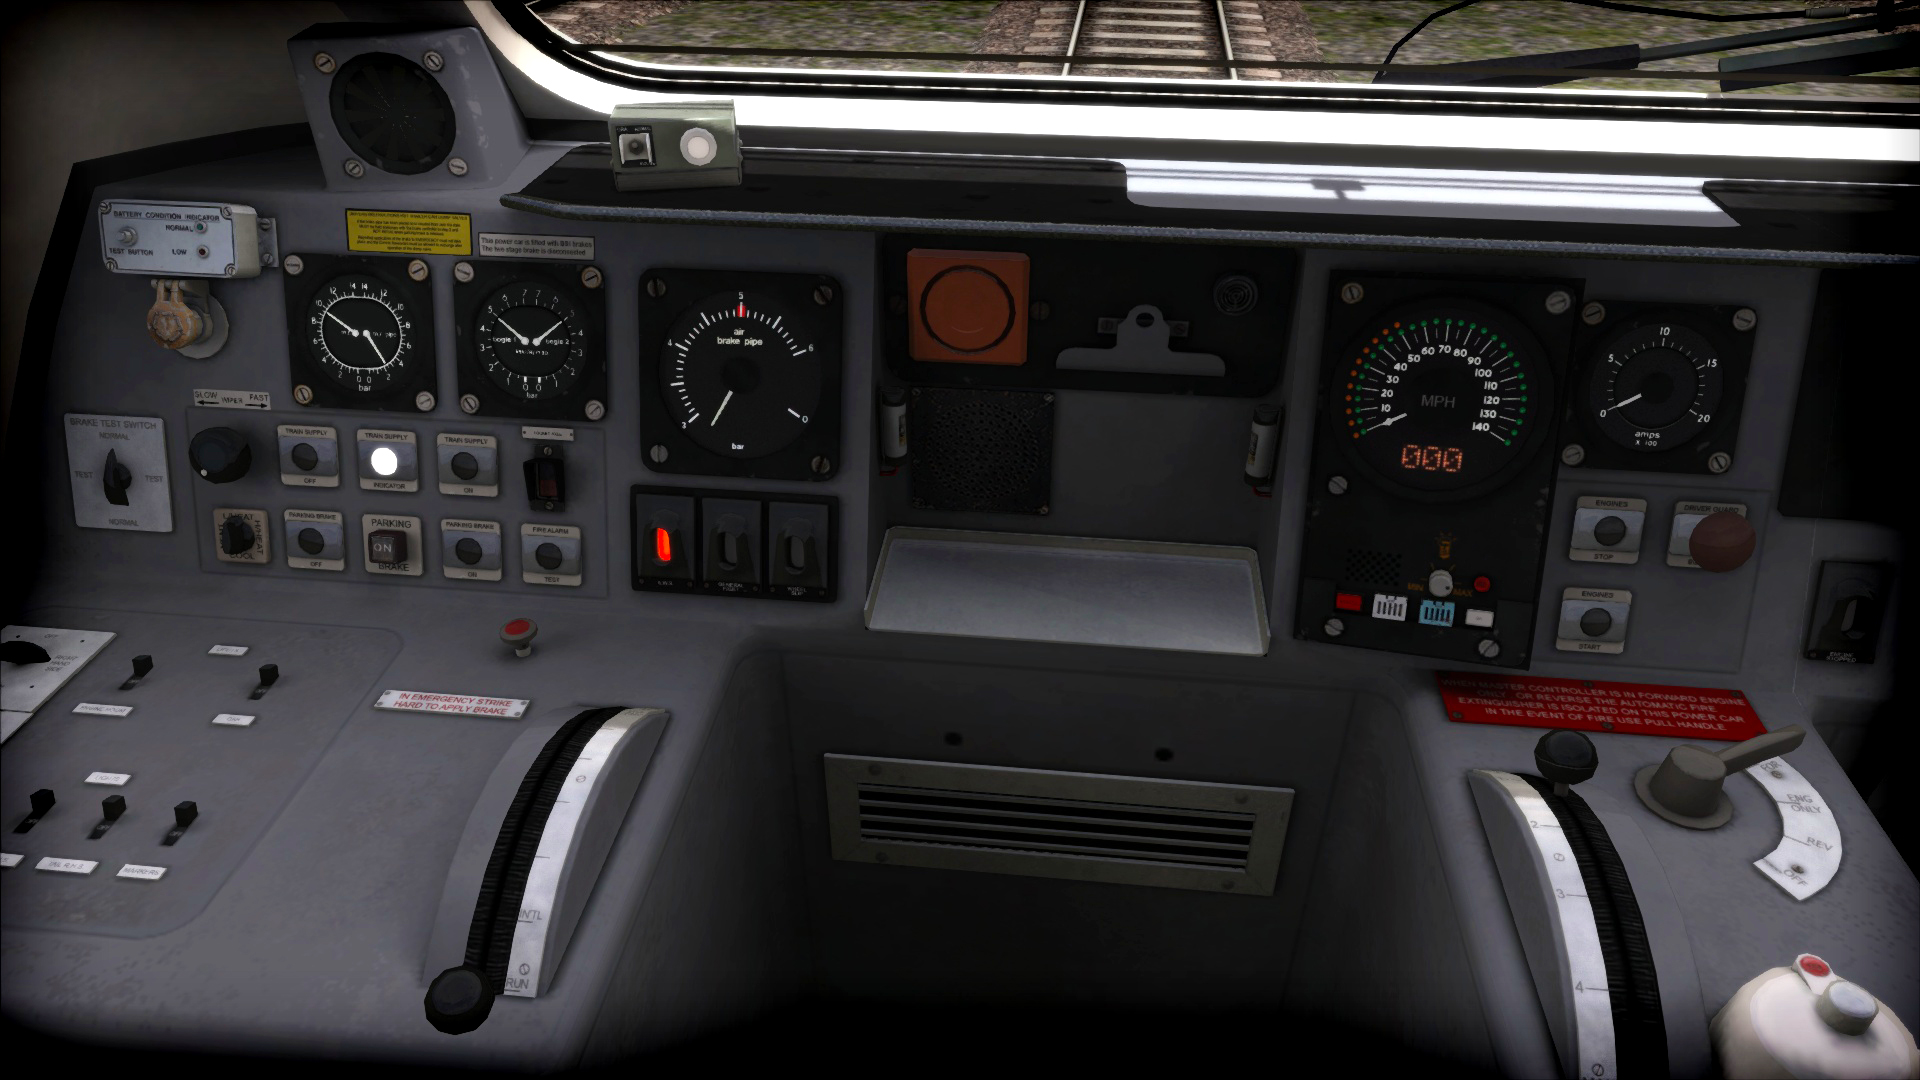 Train Simulator: East Coast Main Line London-Peterborough Route Add-On screenshot